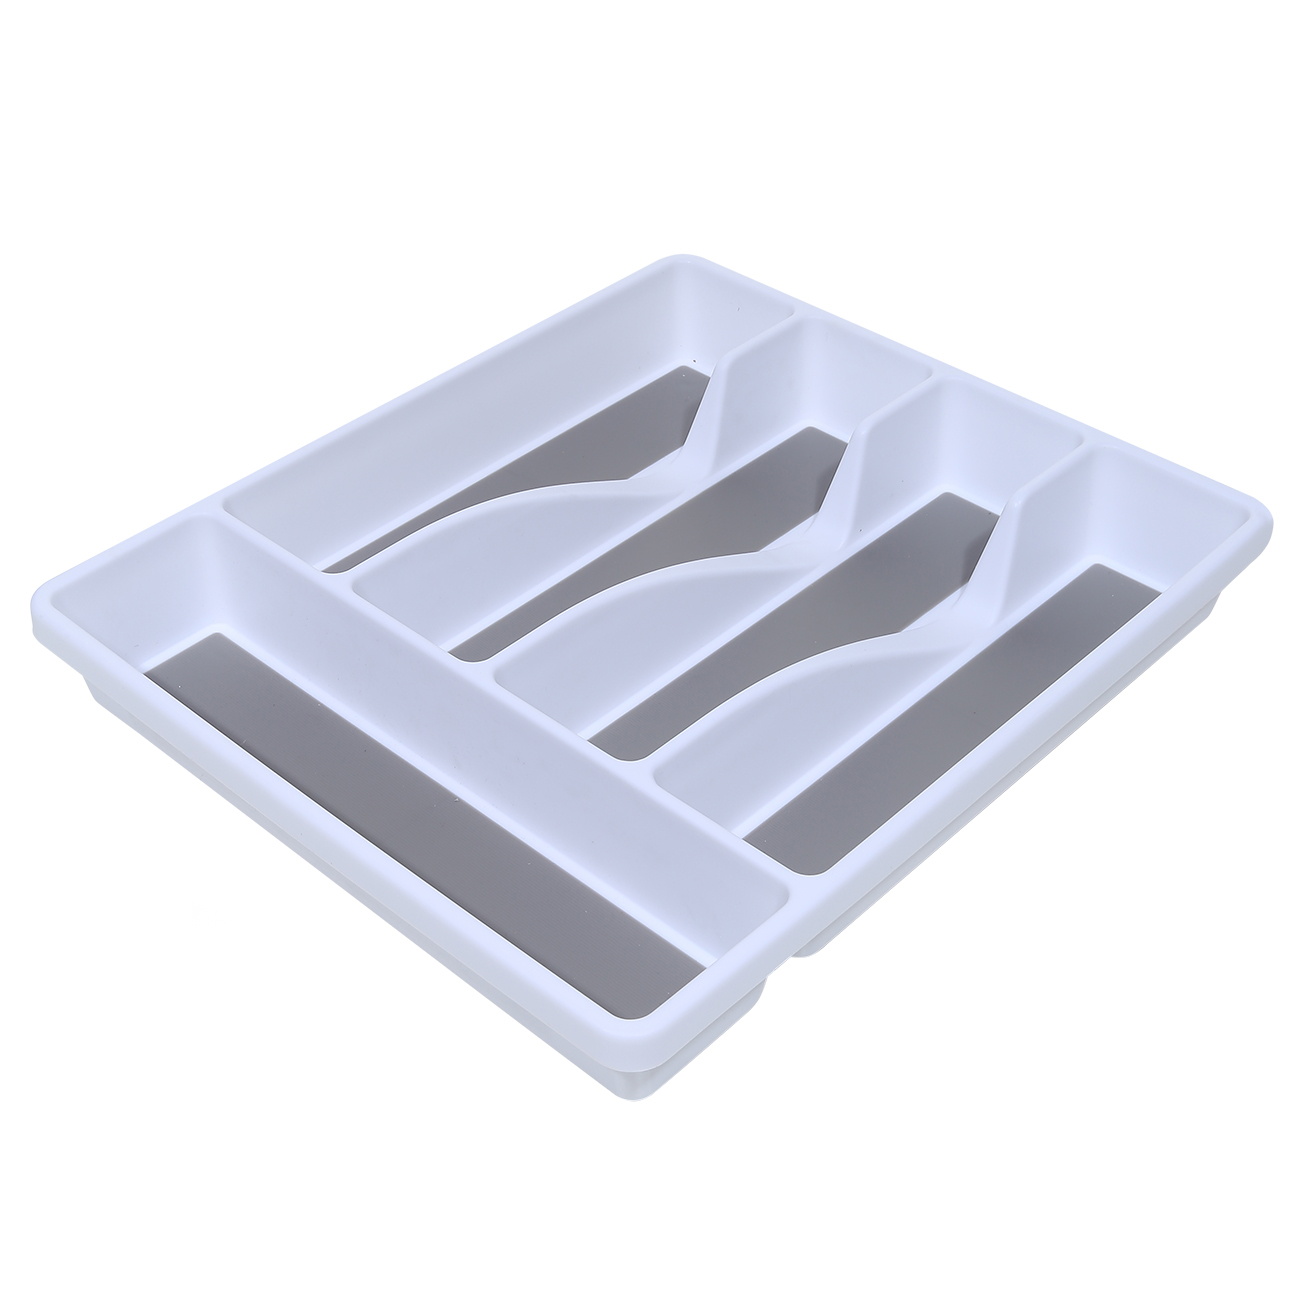 Cutlery tray, 33x29 cm, 5 otd, plastic / rubber, white-grey, Non-slip изображение № 2